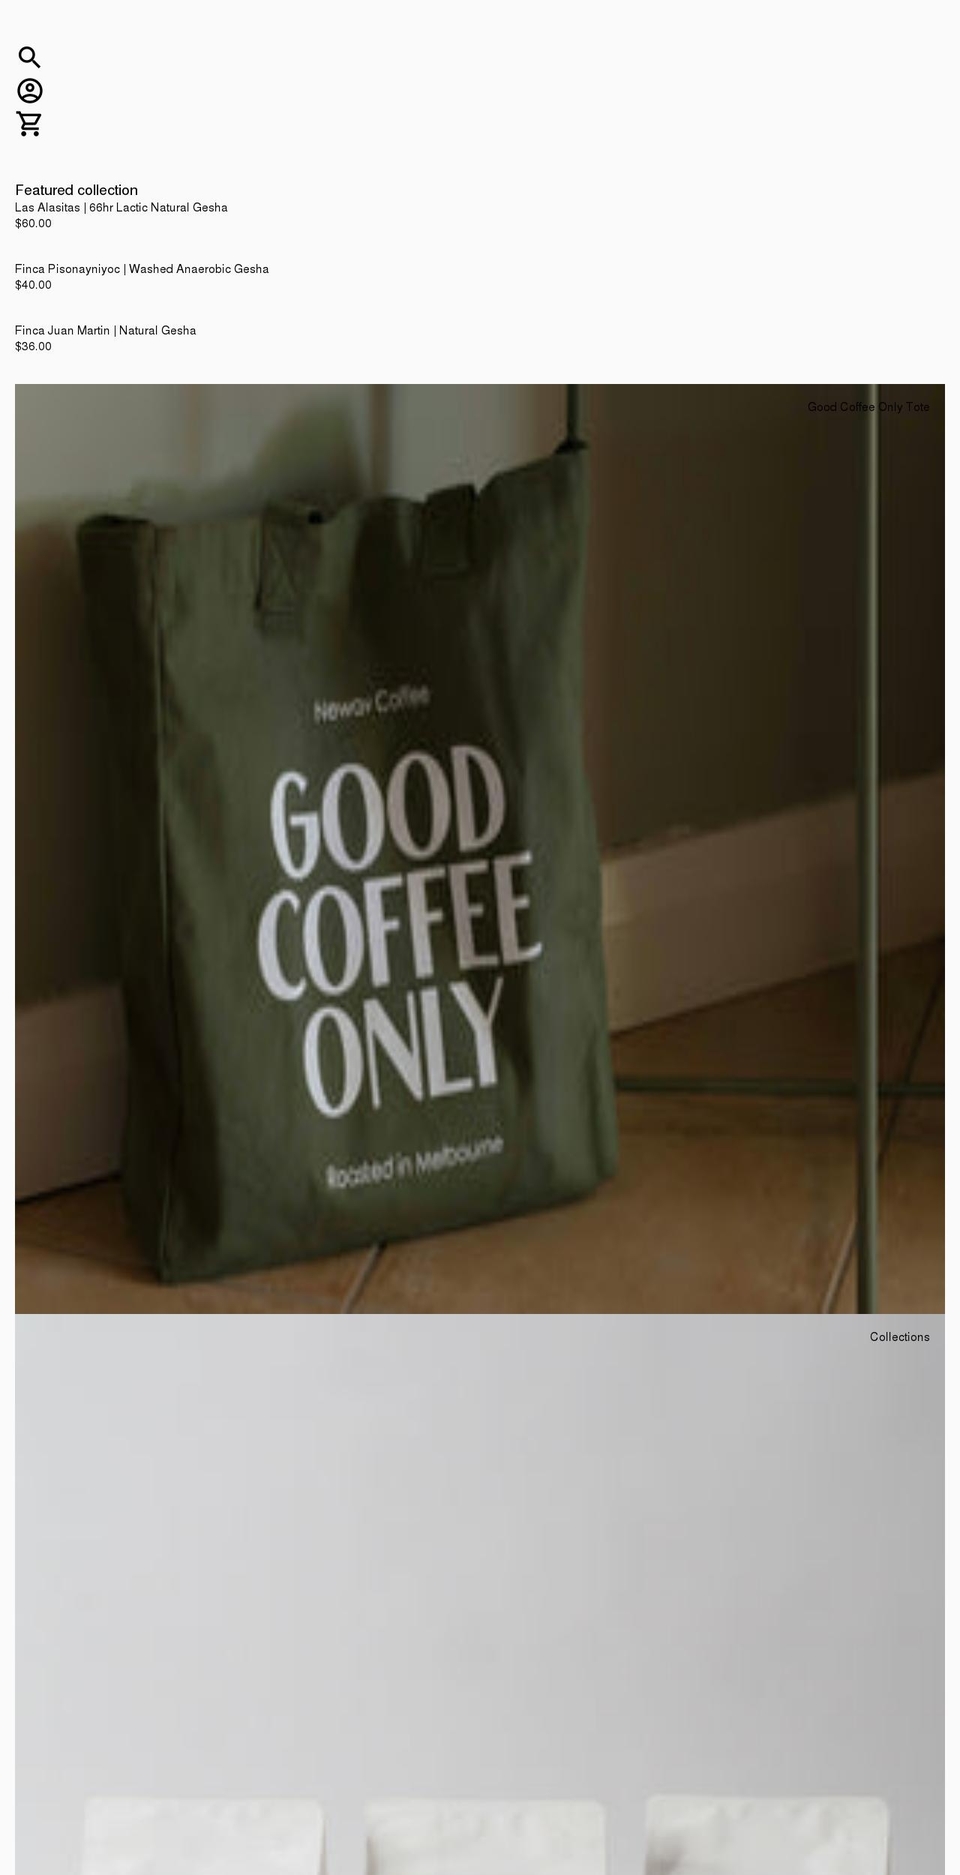 newav.coffee shopify website screenshot